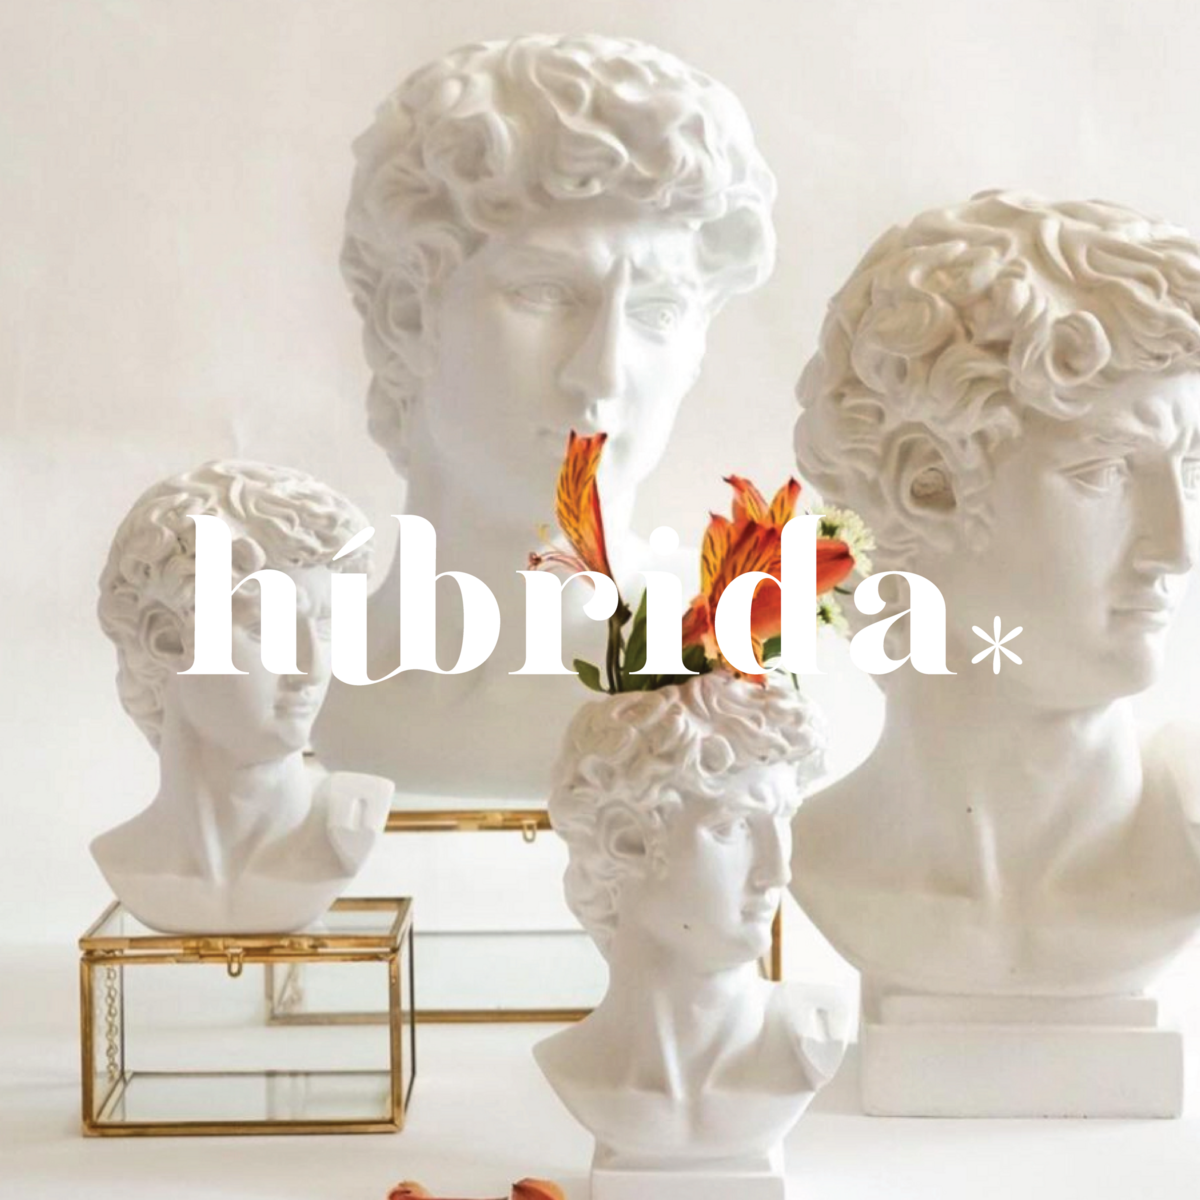 Hibrida-Rebranding2020_Entrega-38